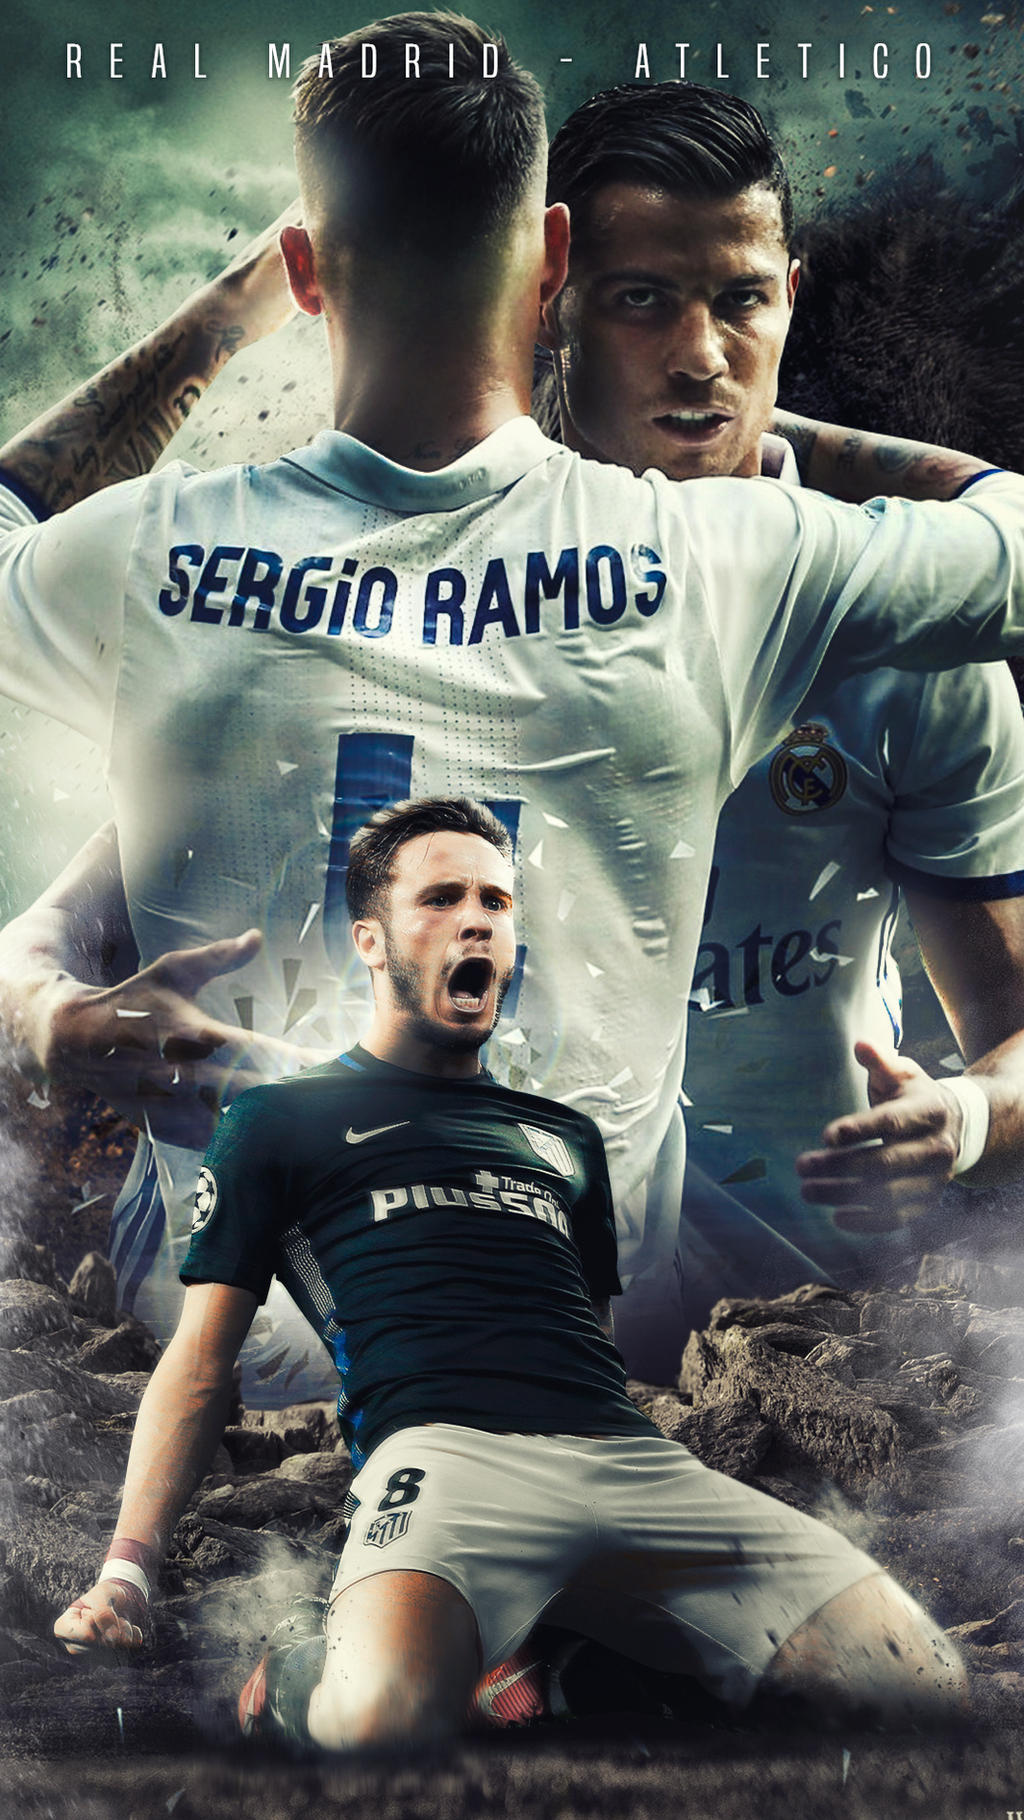 Real Madrid Vs Atletico Madrid HD Poster By Kerimov23 On DeviantArt